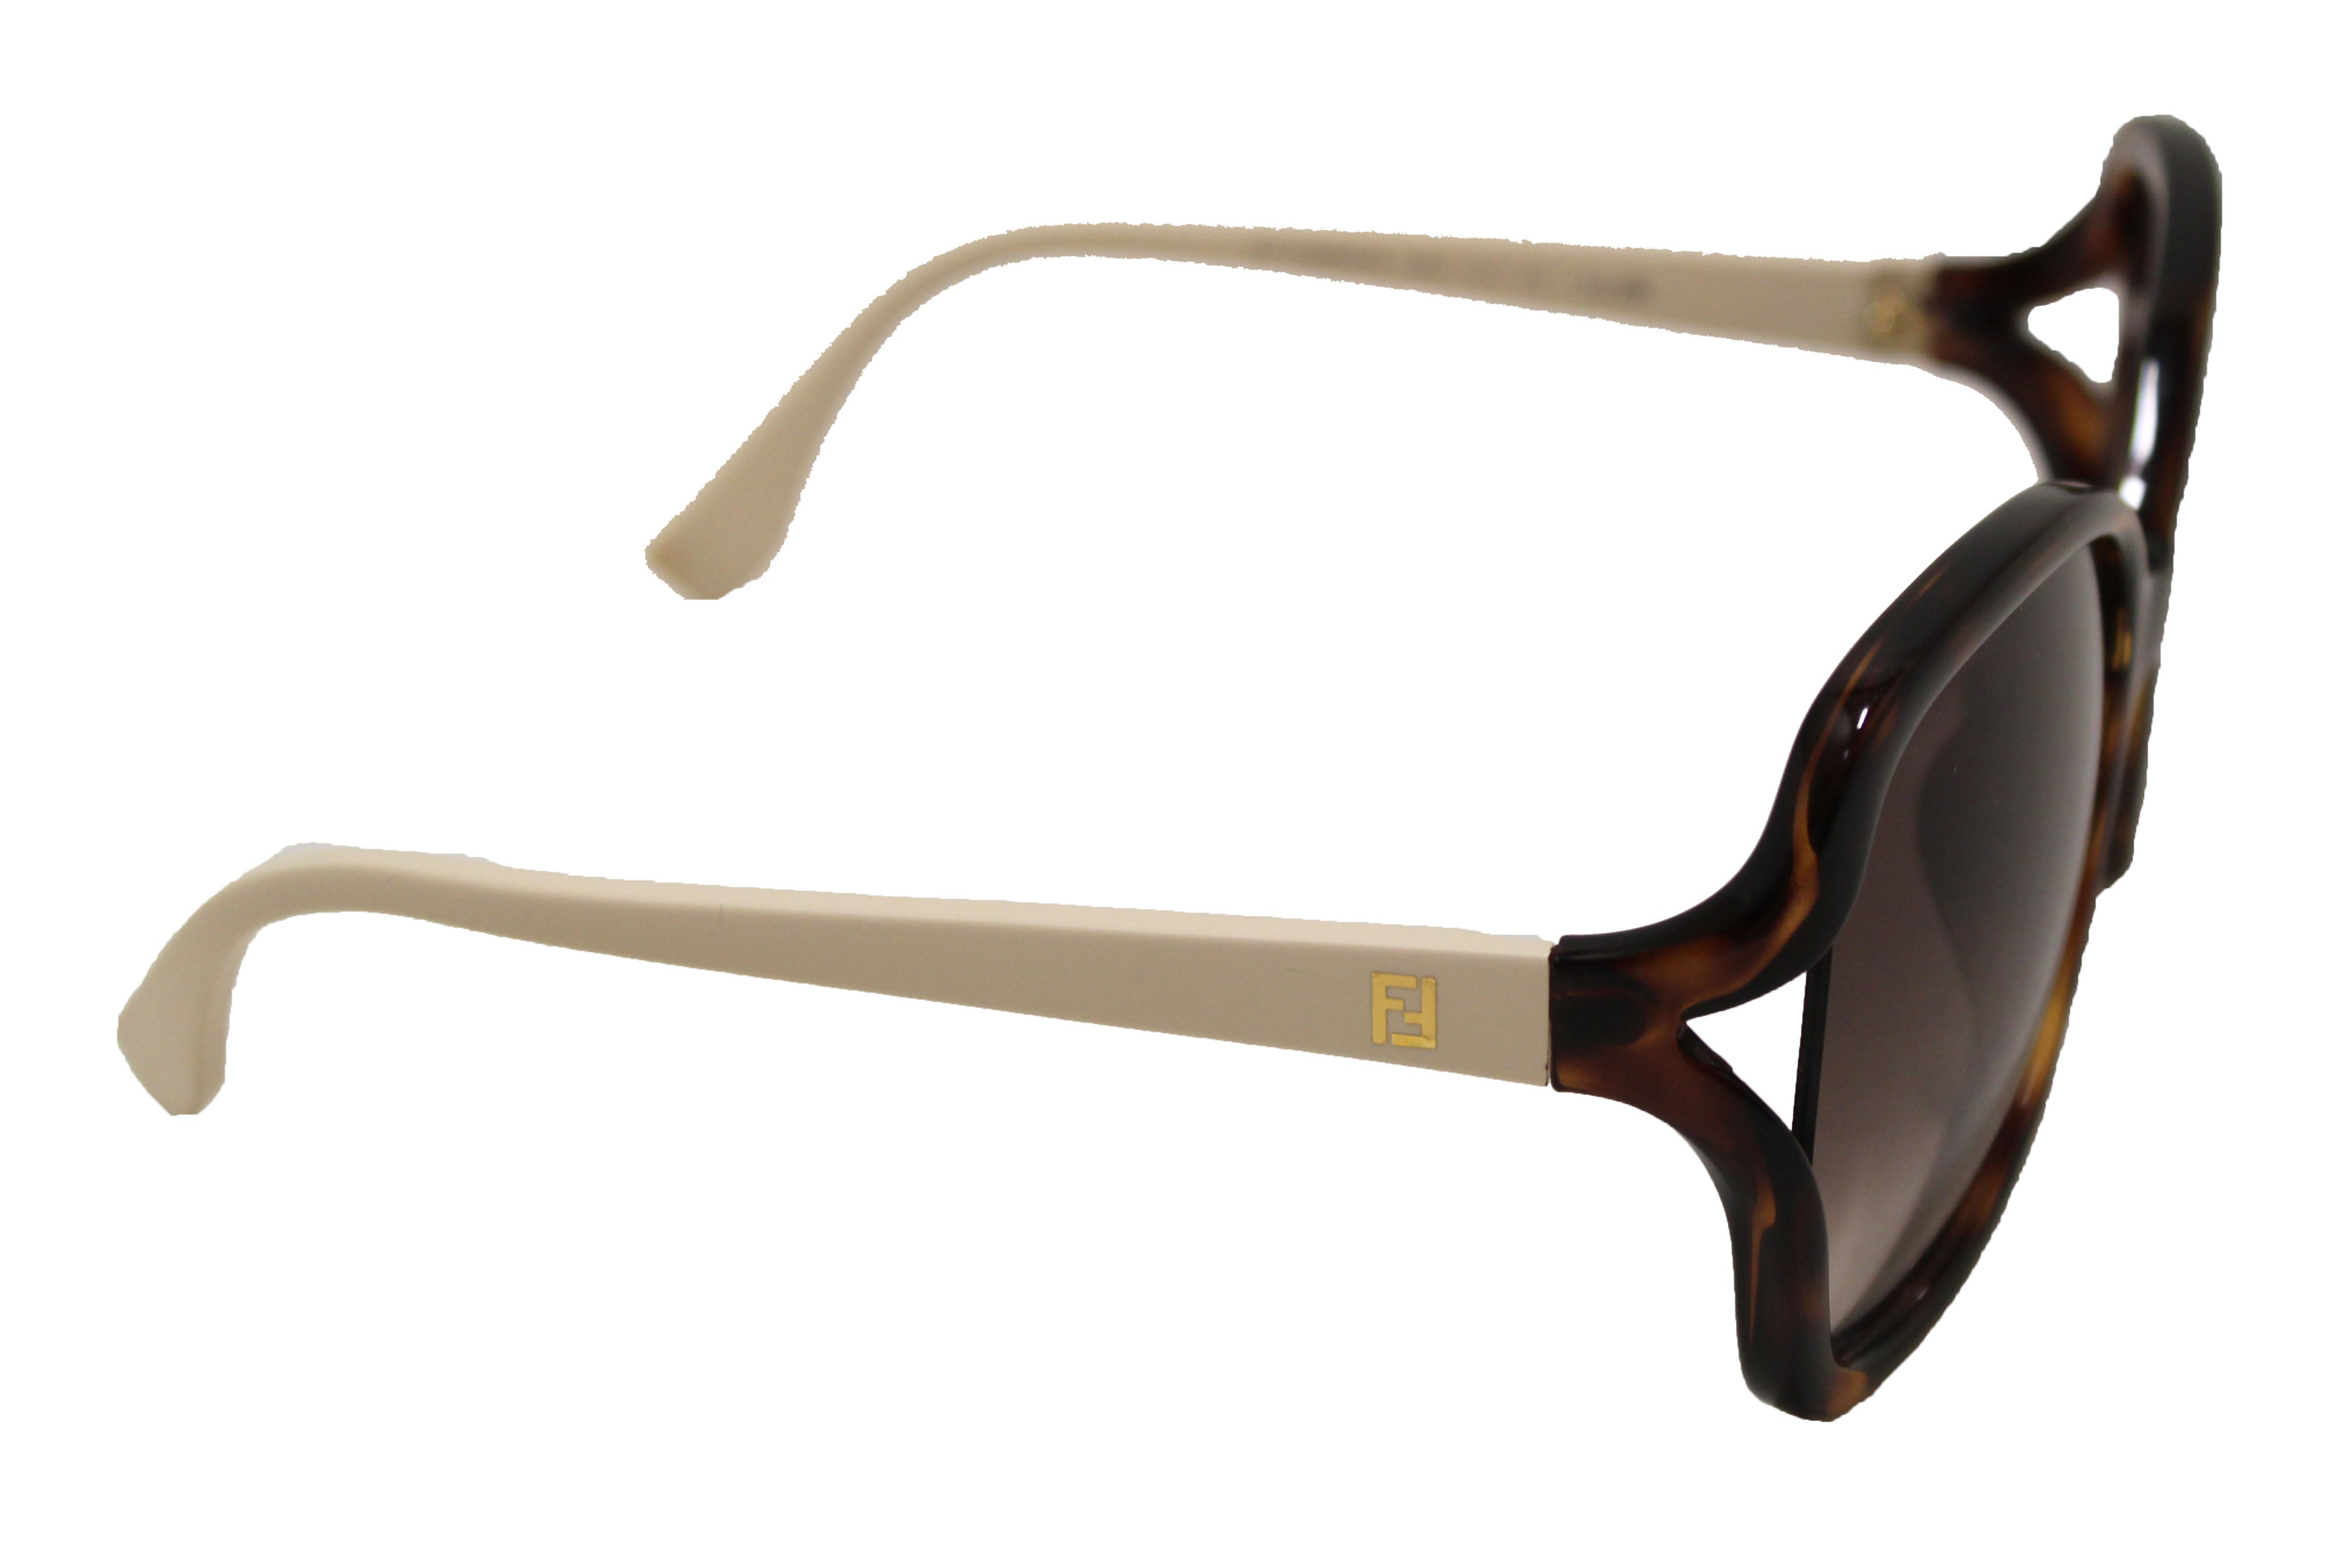 Authentic Fendi Tortoise Shell Acetate And White Frame Sunglasses